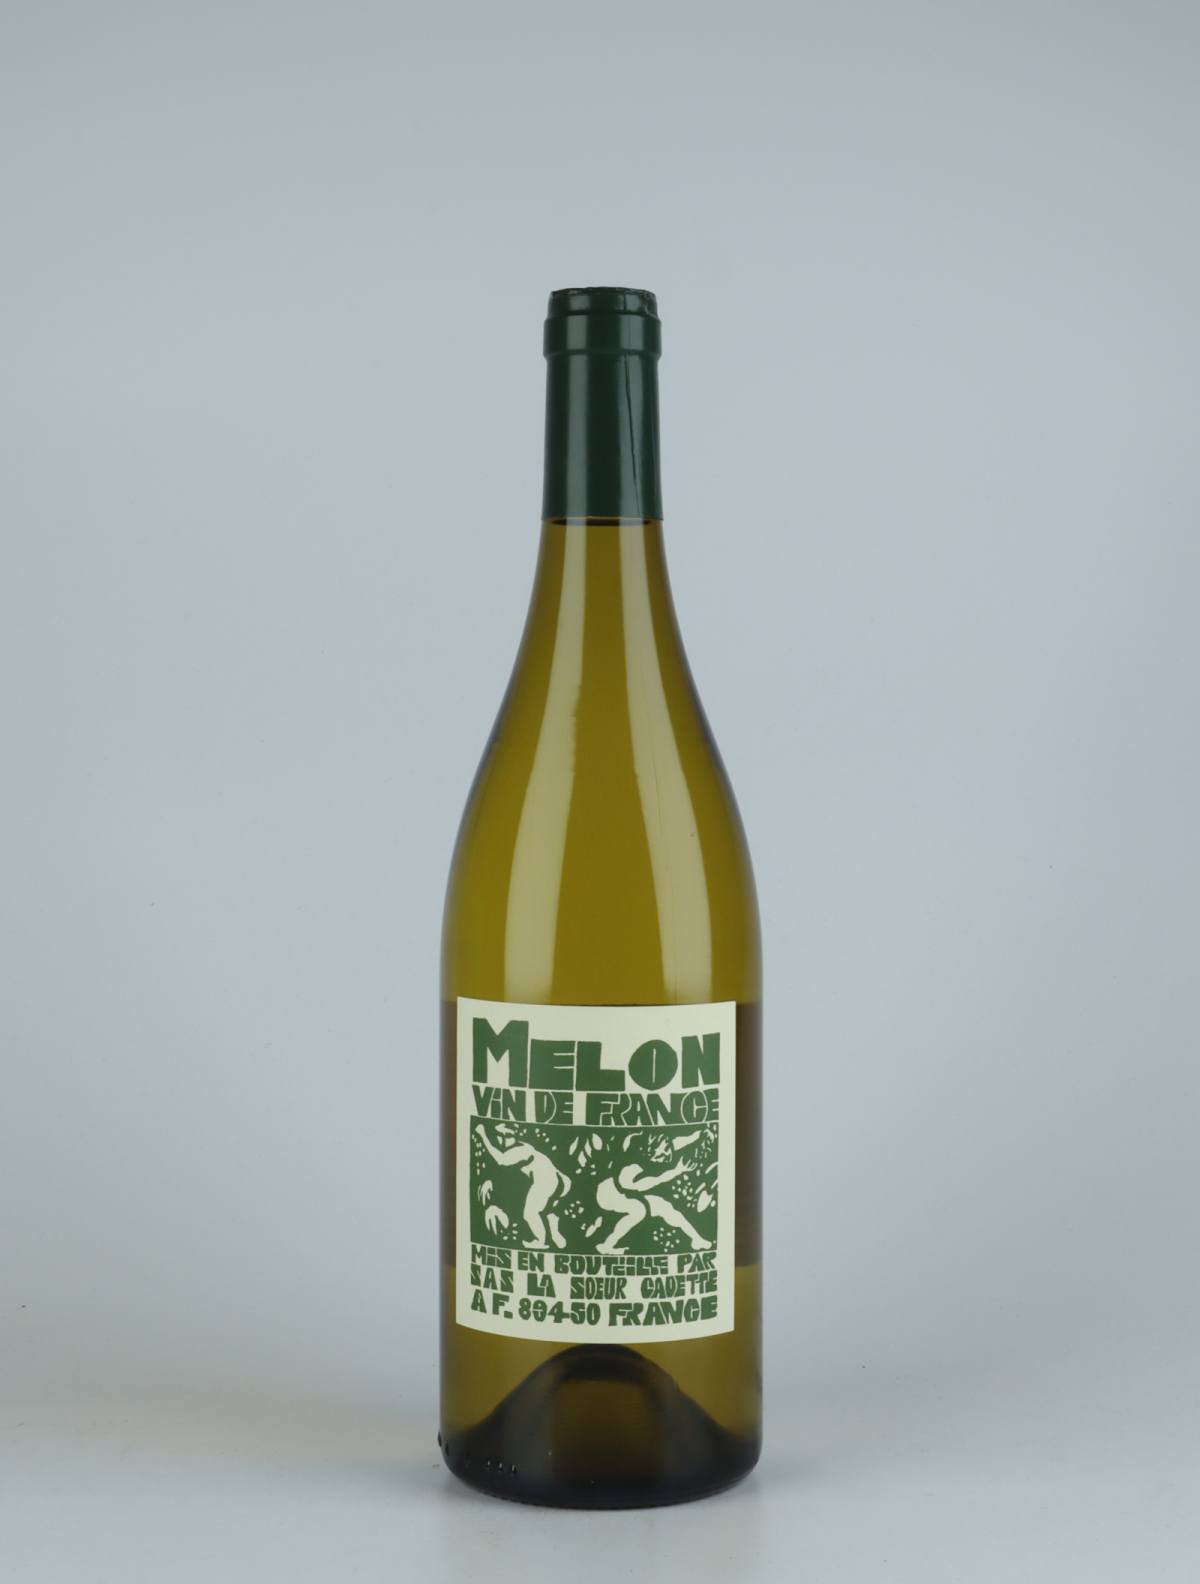 A bottle 2020 Melon White wine from La Sœur Cadette, Burgundy in France